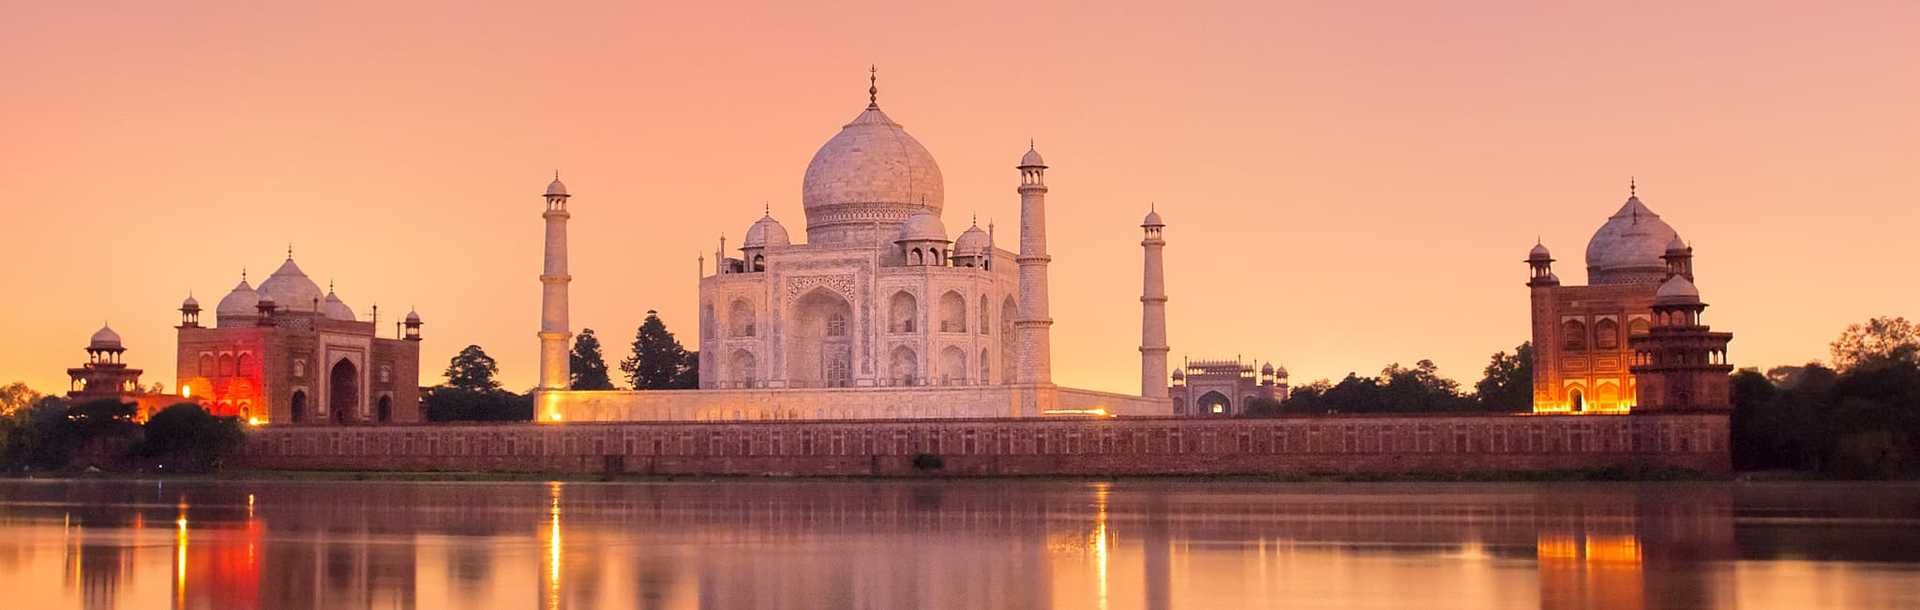 Taj Mahal during sunset in Agra, India.